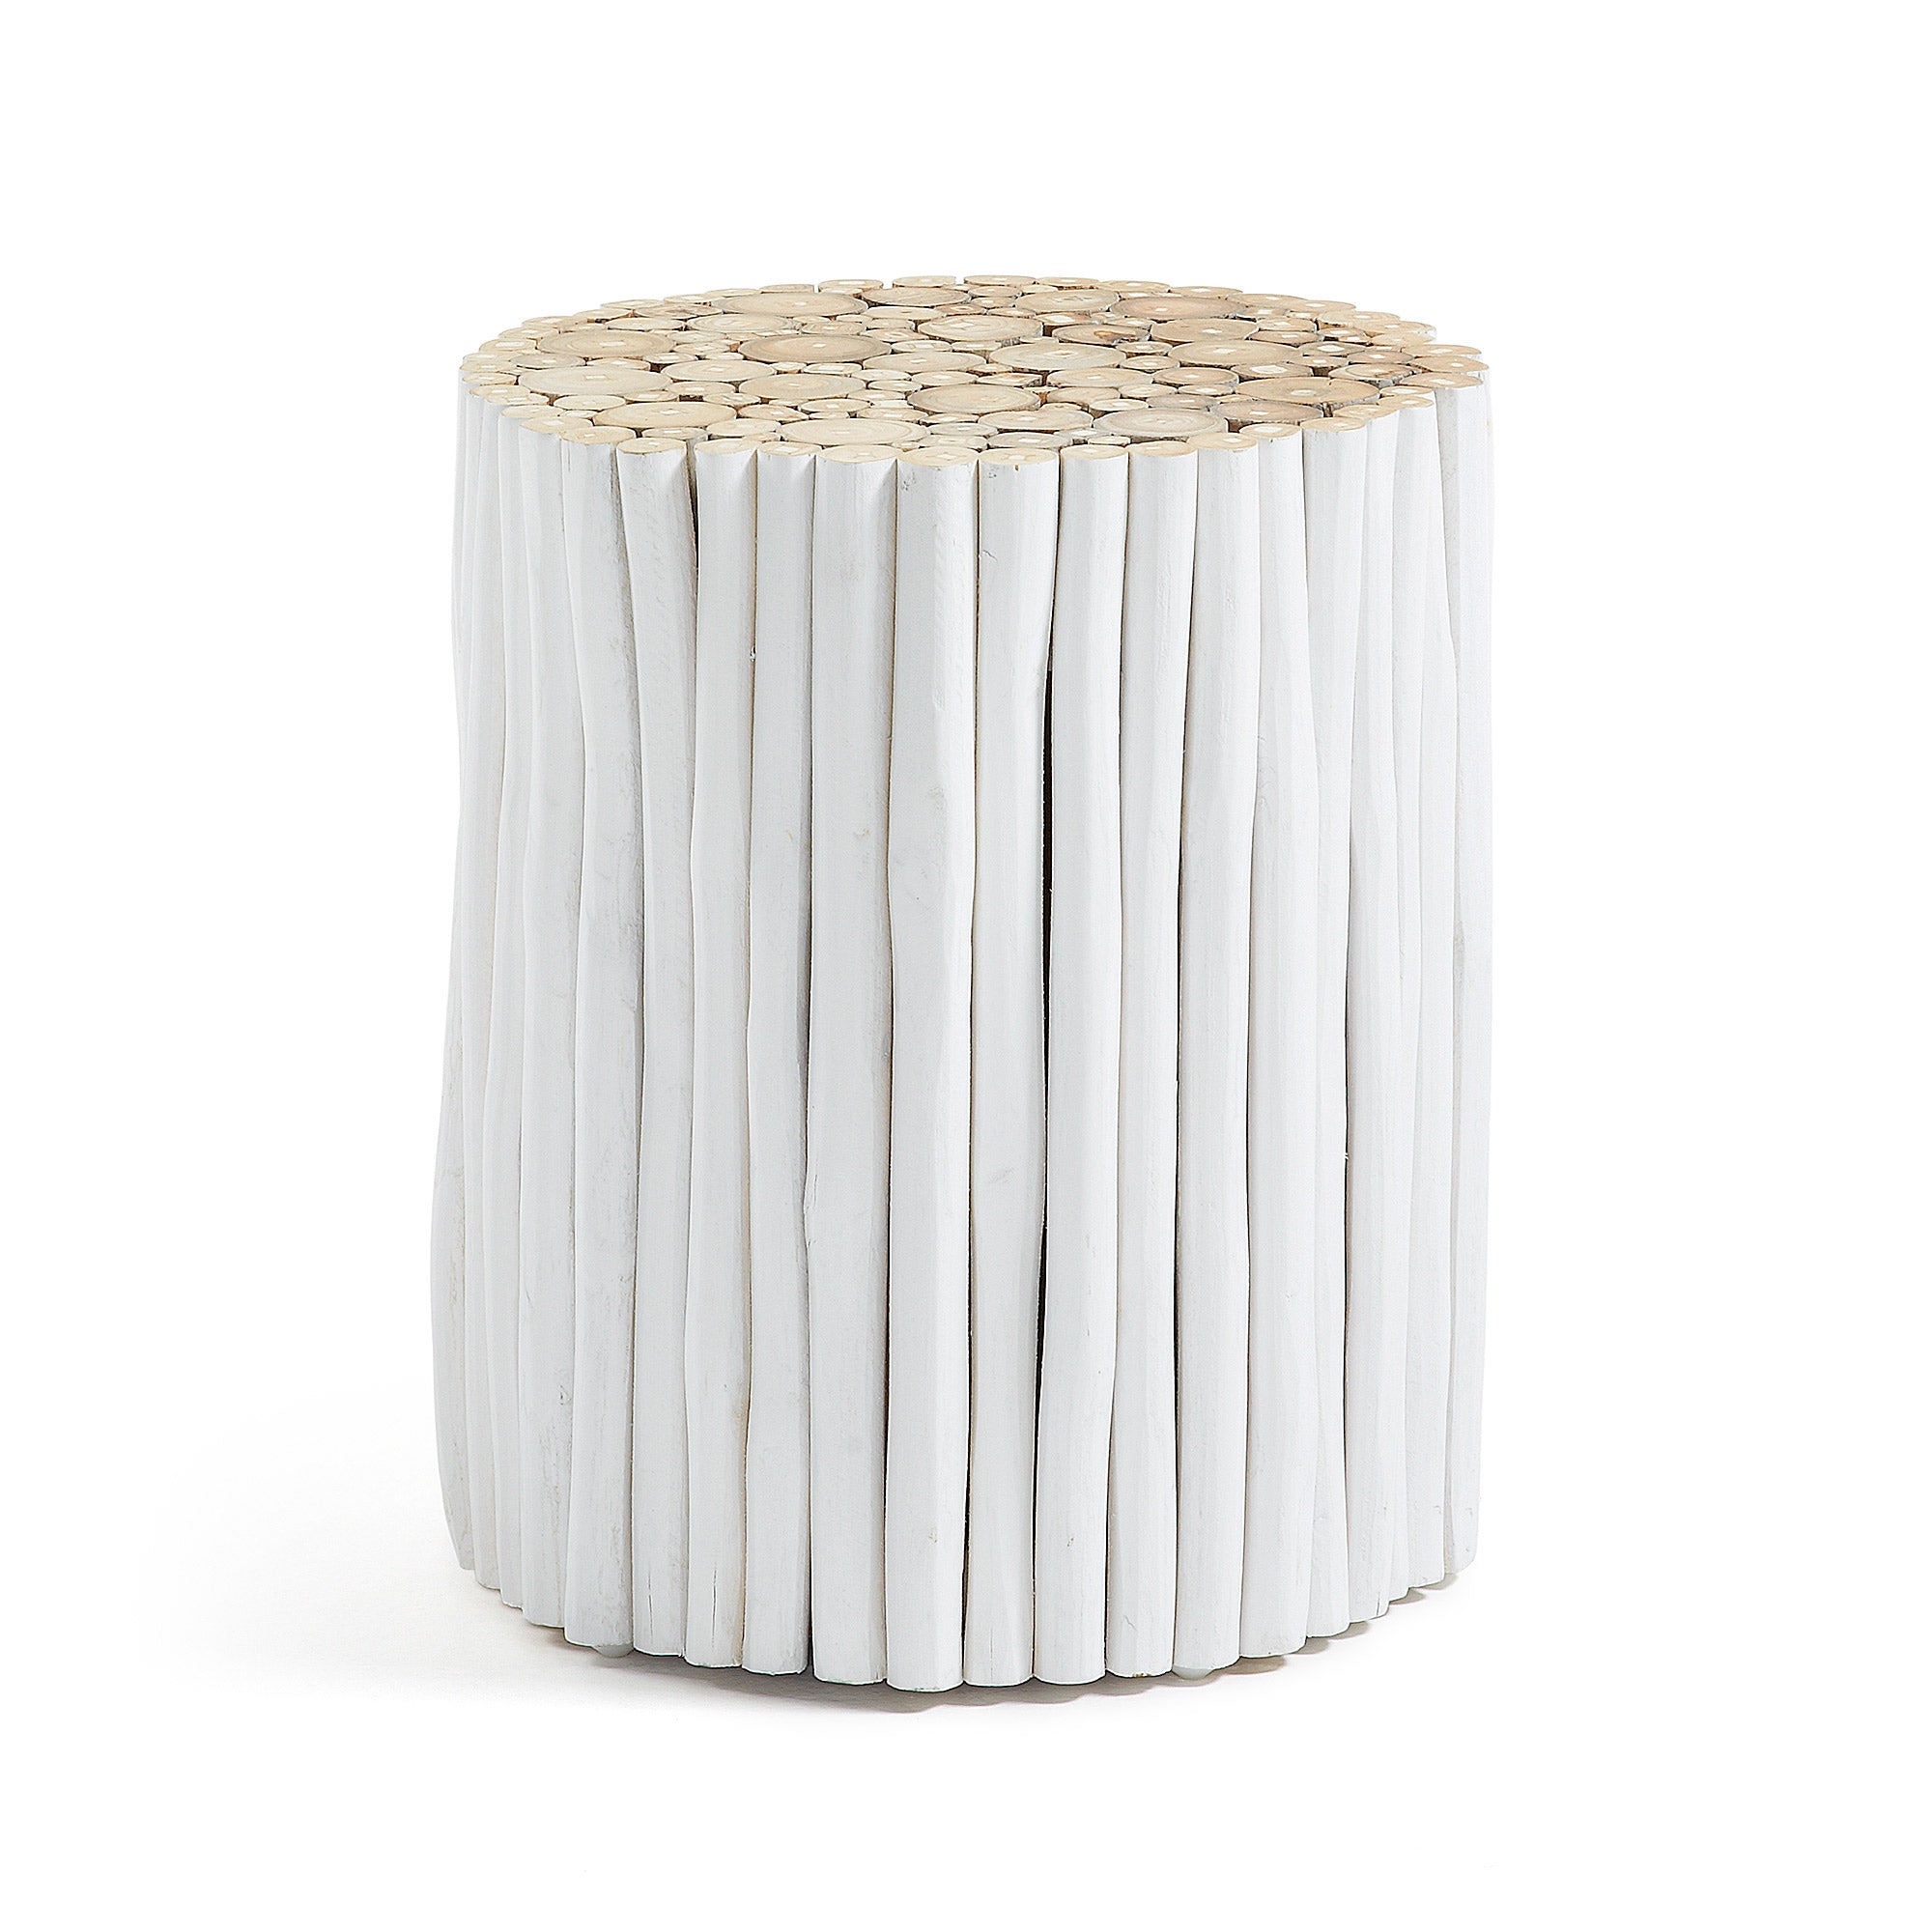 Filip solid teak with white finish side table, Ø 35 cm